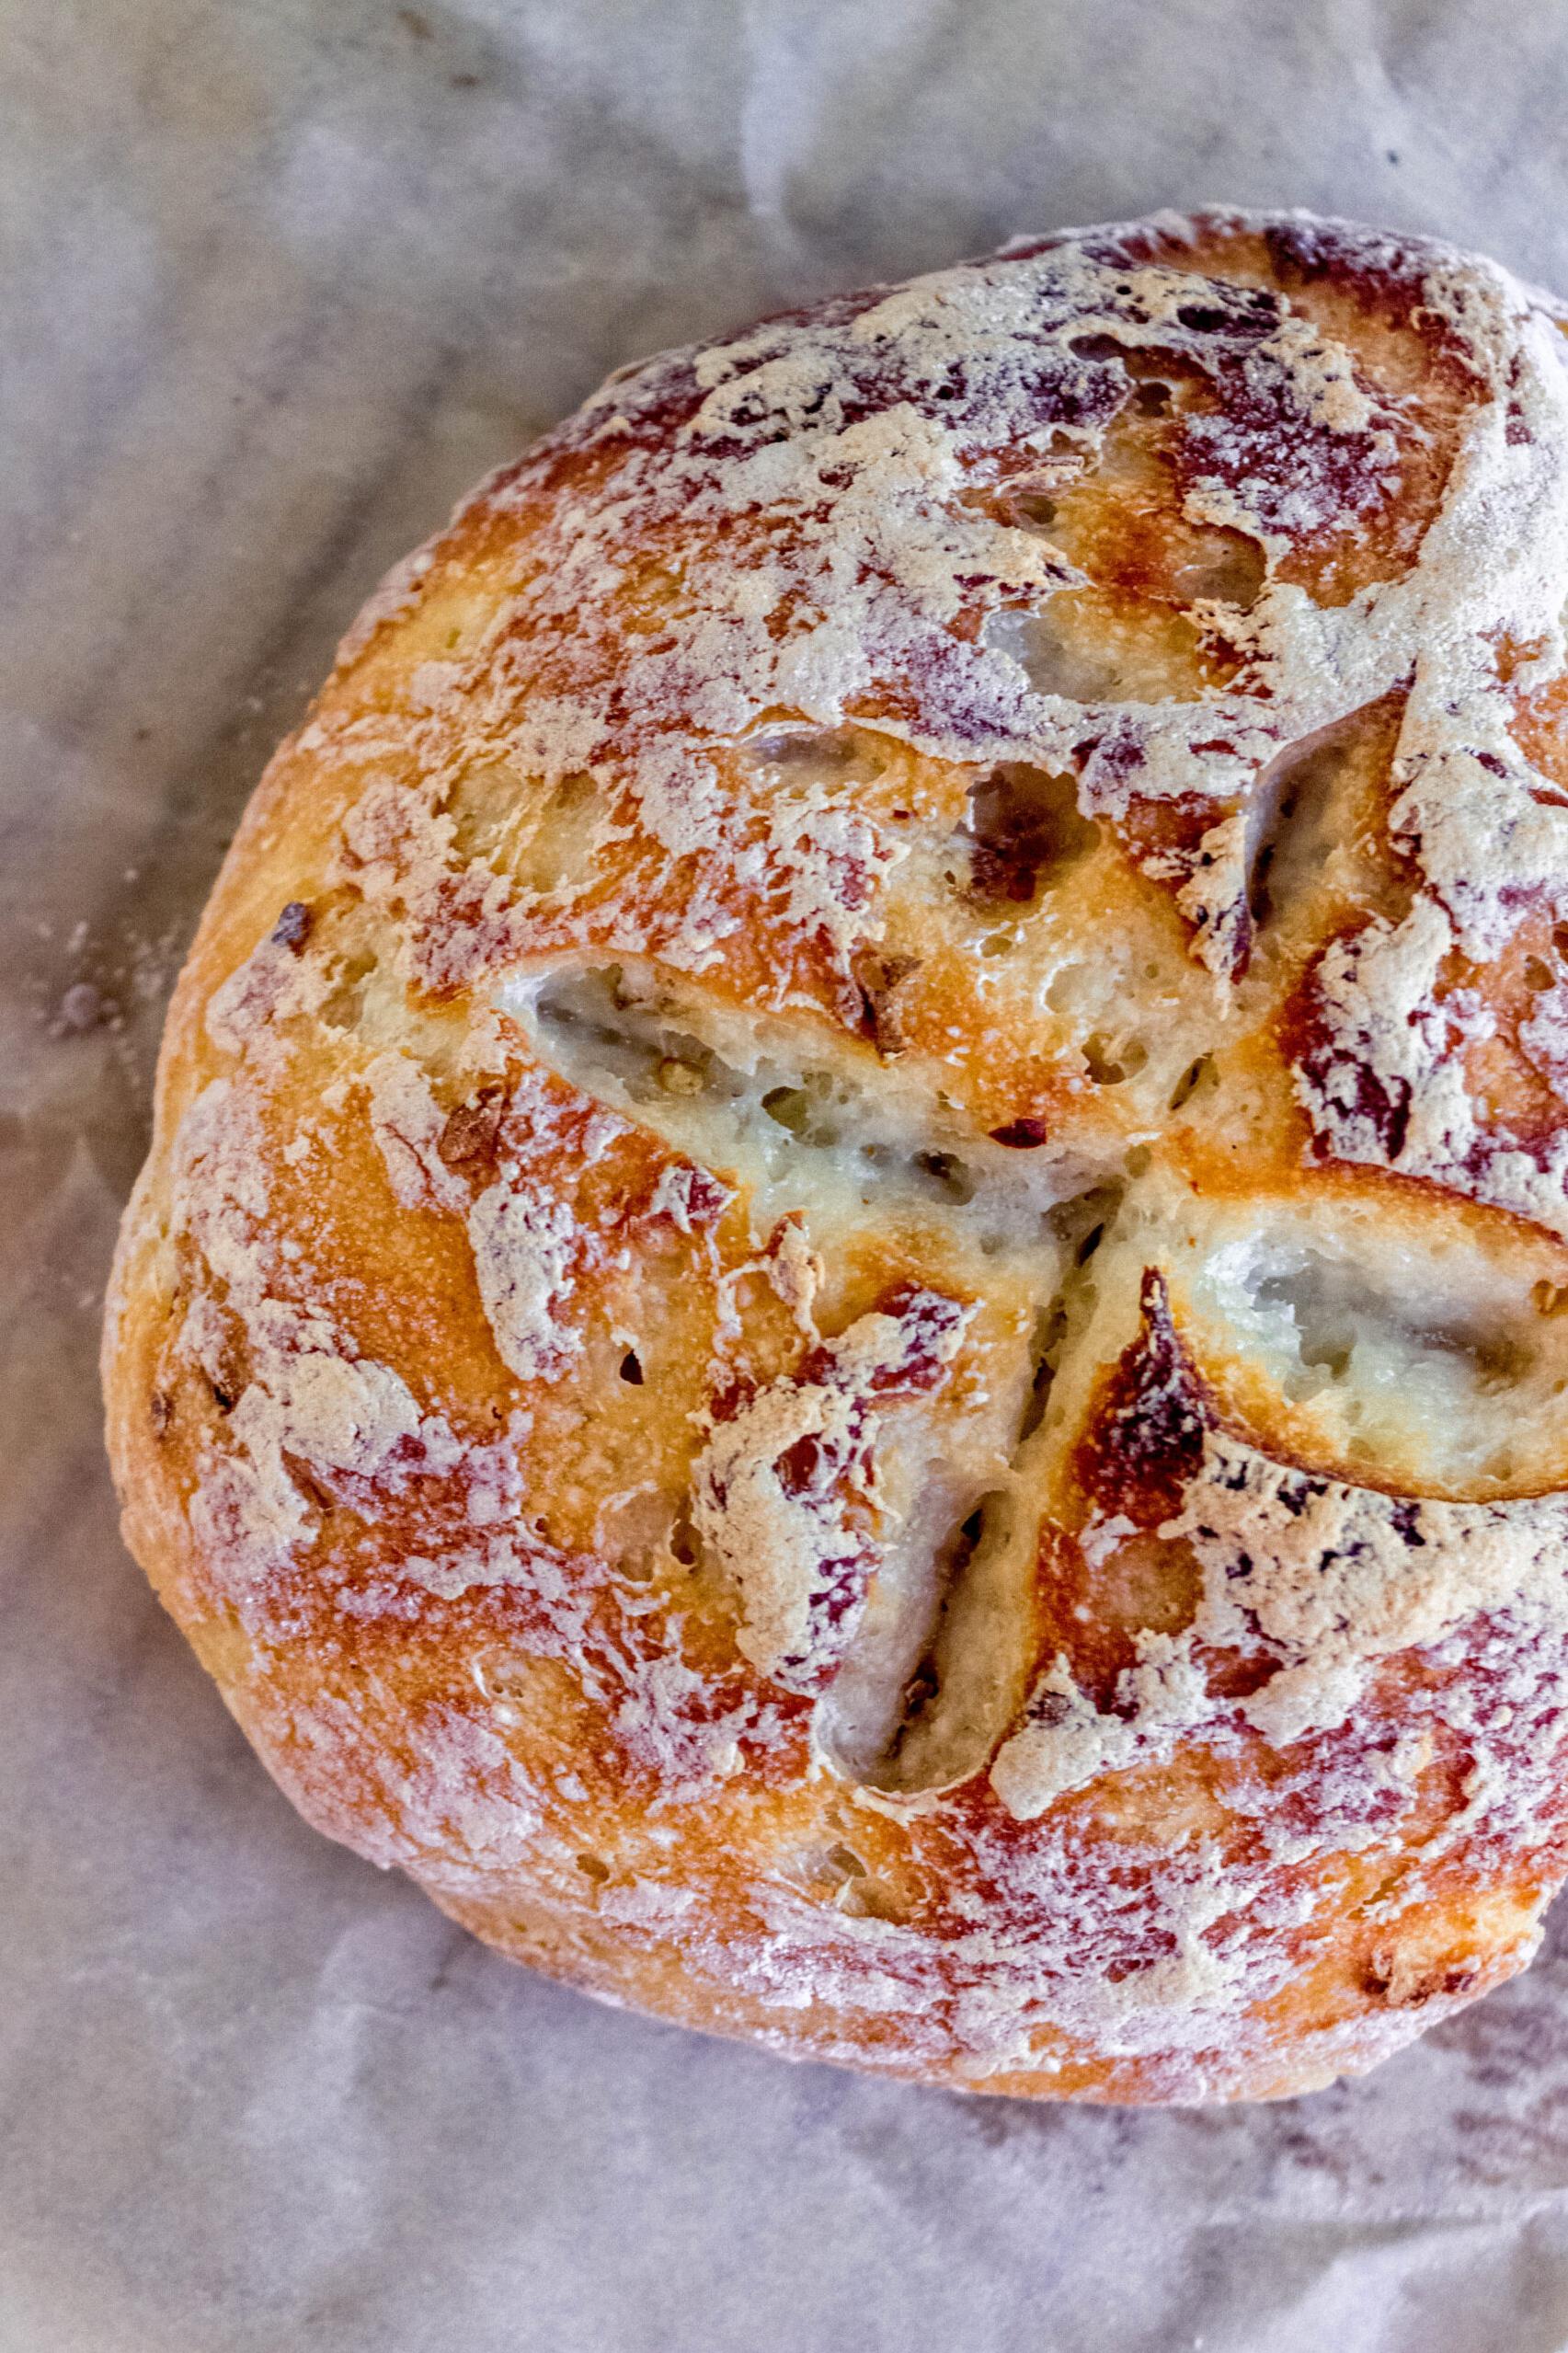  Your taste buds won't even realize that it's gluten-free bread